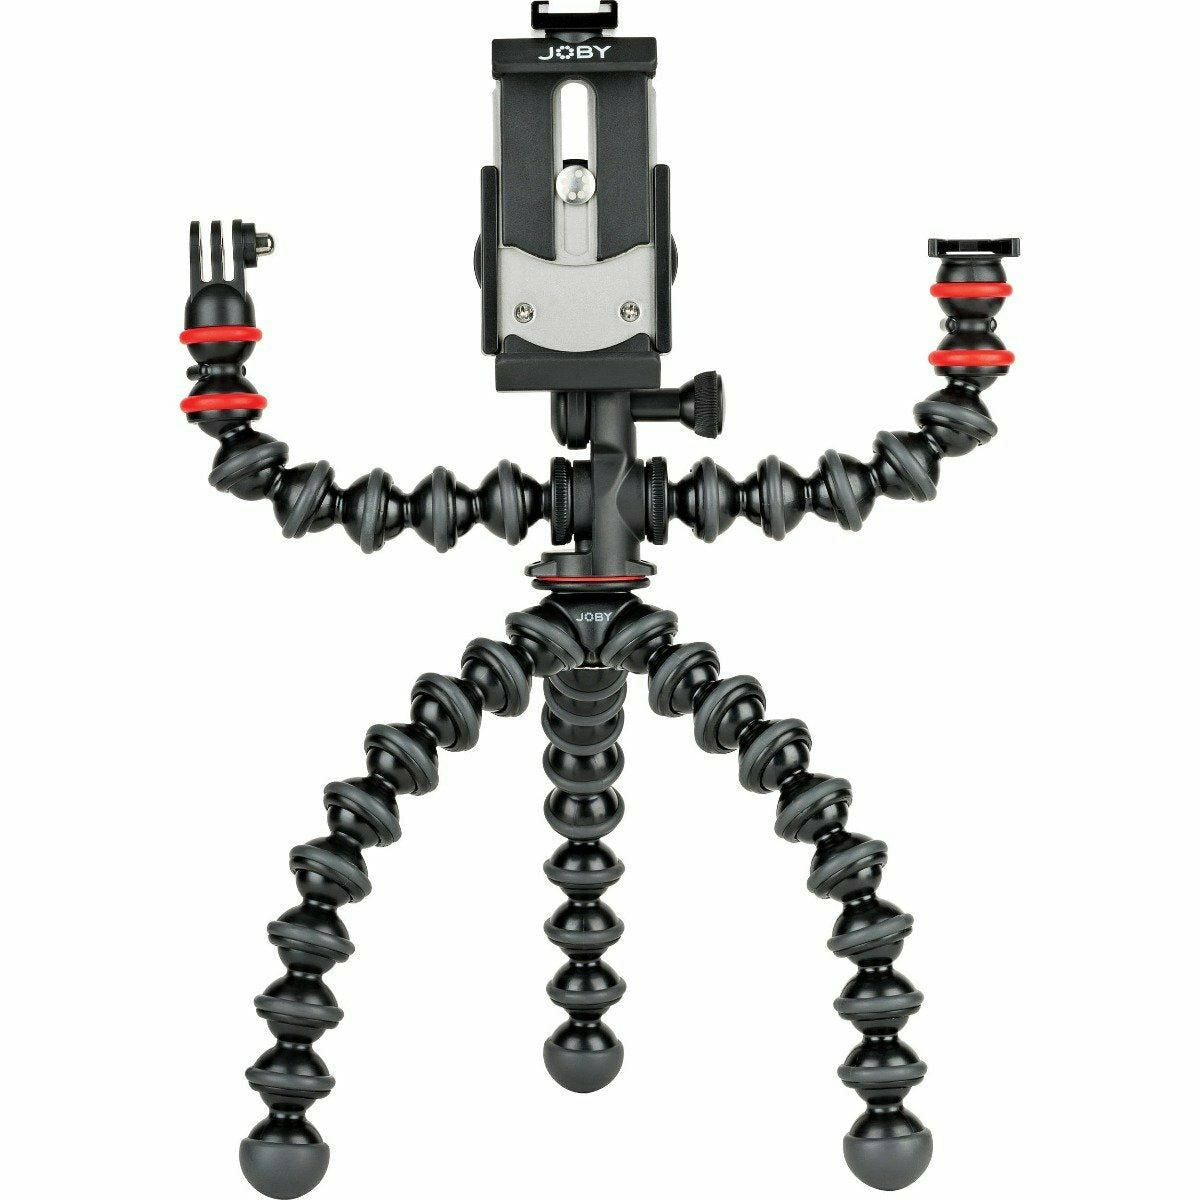 JOBY Kit GorillaPod Mobile Rig 8x12x33cm 2x Arms 2x Cold Shoe 1x GoPro Mount - Dragon Image